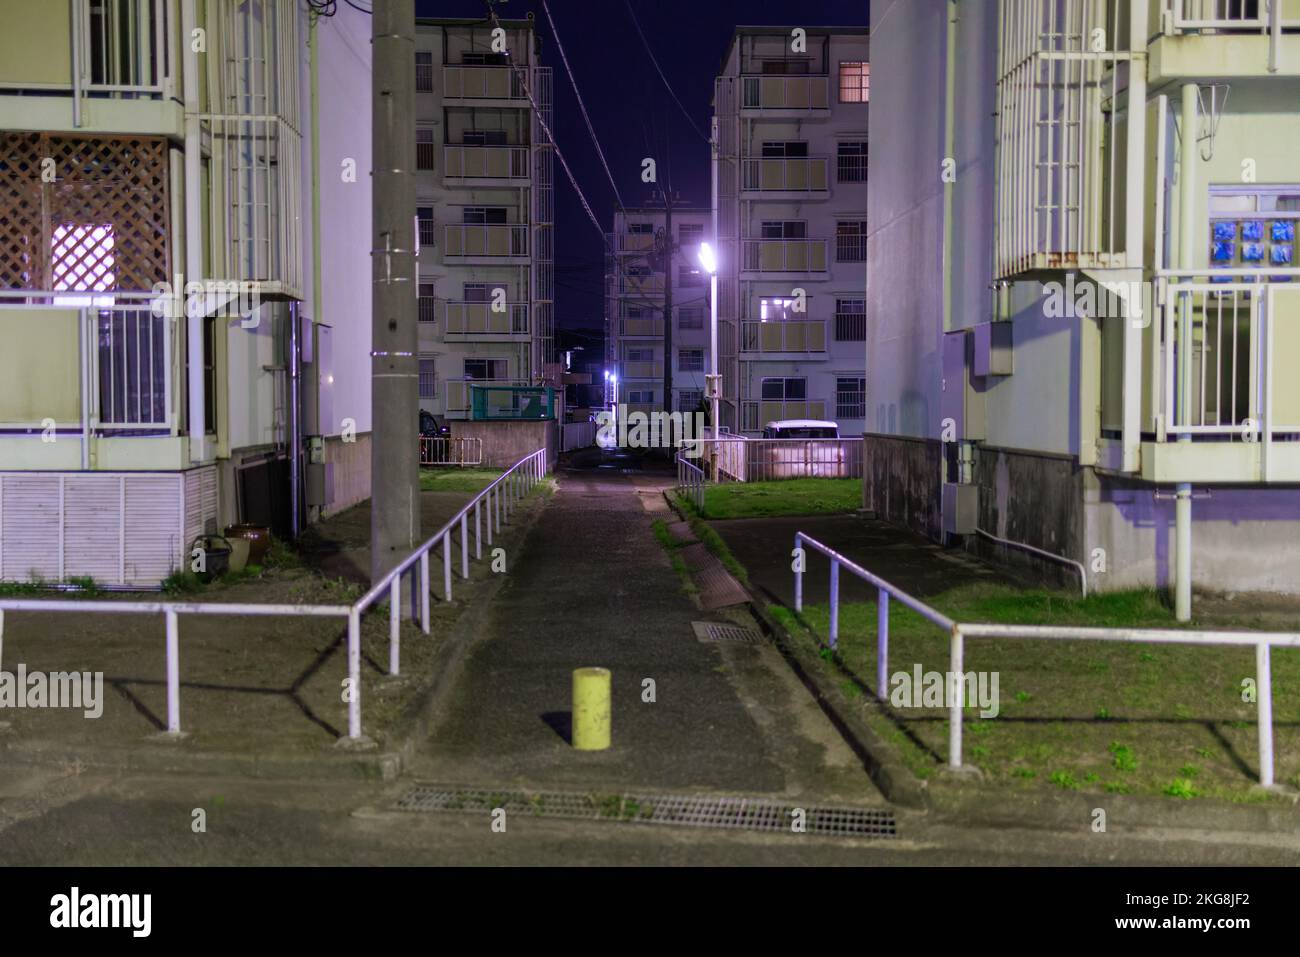 Dark walkway through multi-story apartment buildings at night Stock Photo